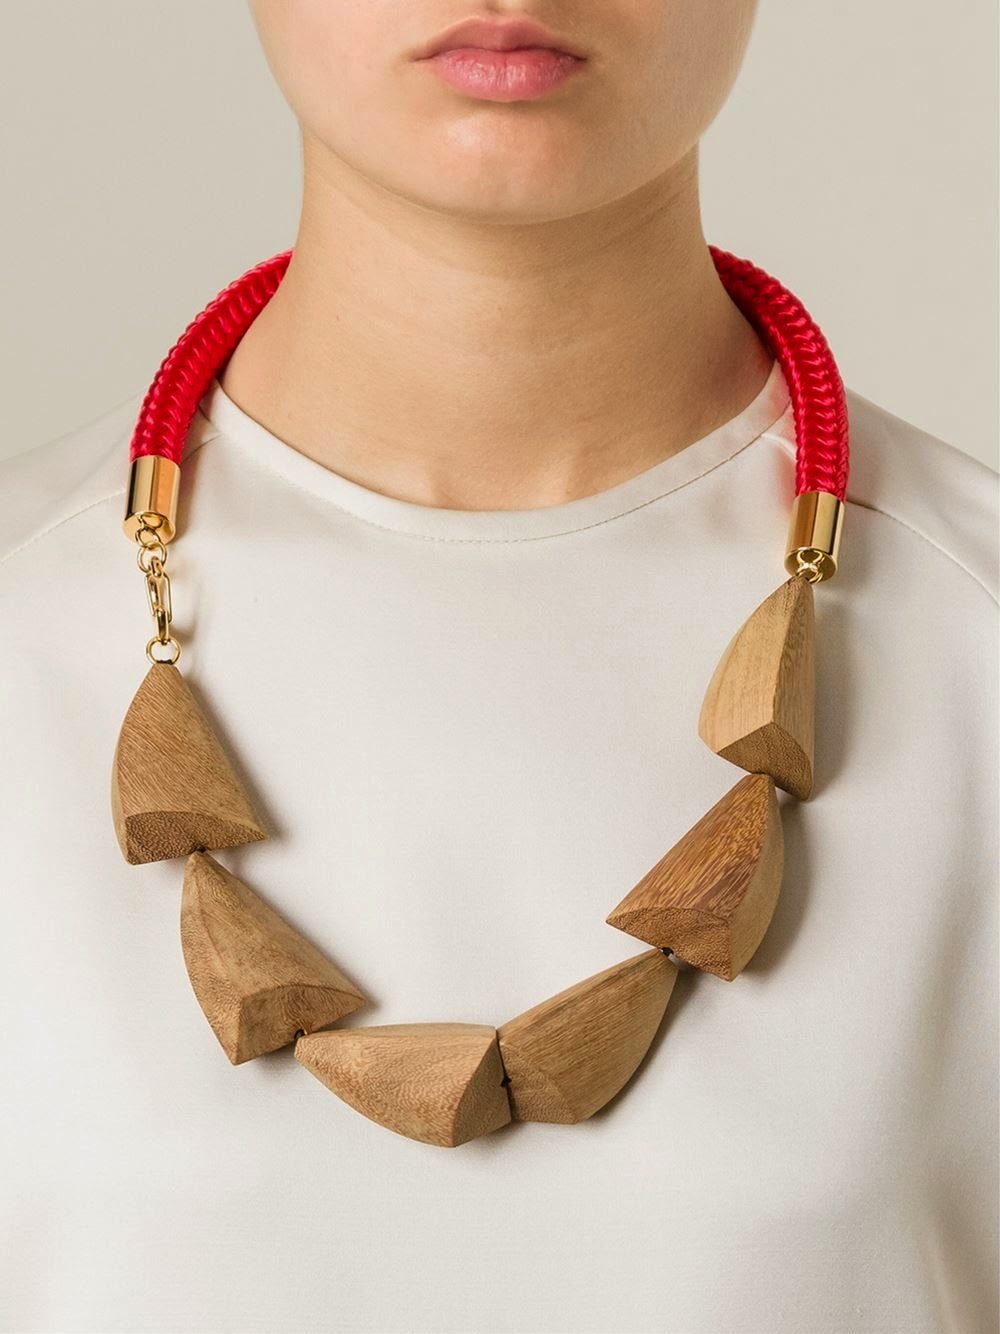 http://www.farfetch.com/tw/shopping/women/marni-contrasting-panel-necklace-item-10986103.aspx?storeid=9475&ffref=lp_23_